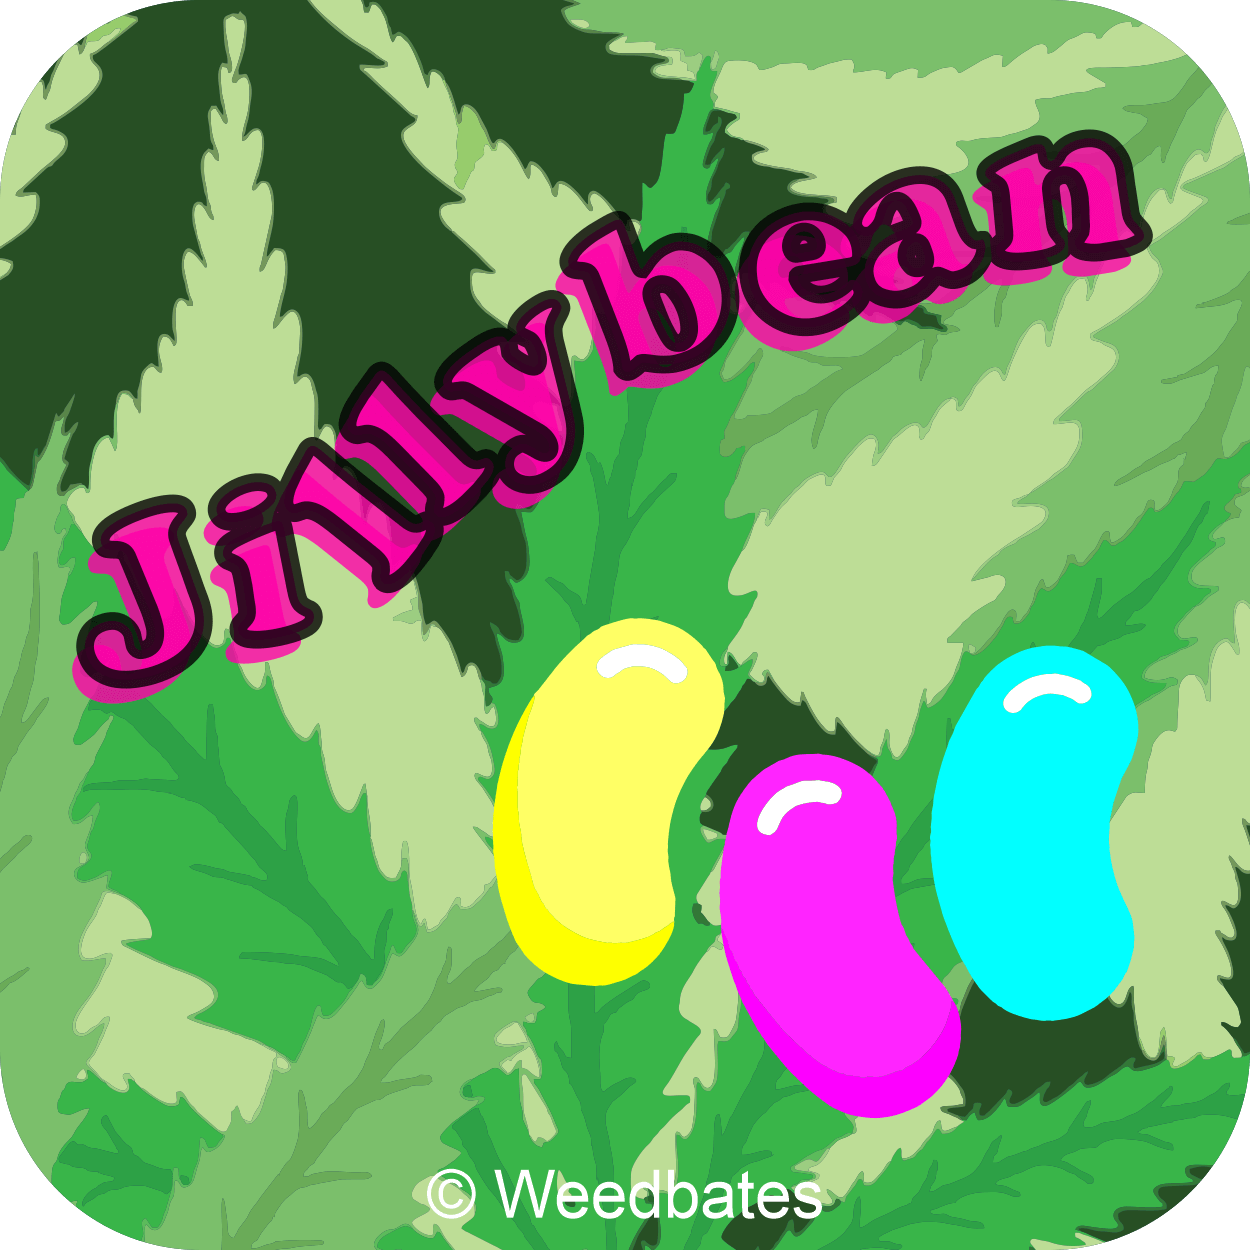 Jillybean strain